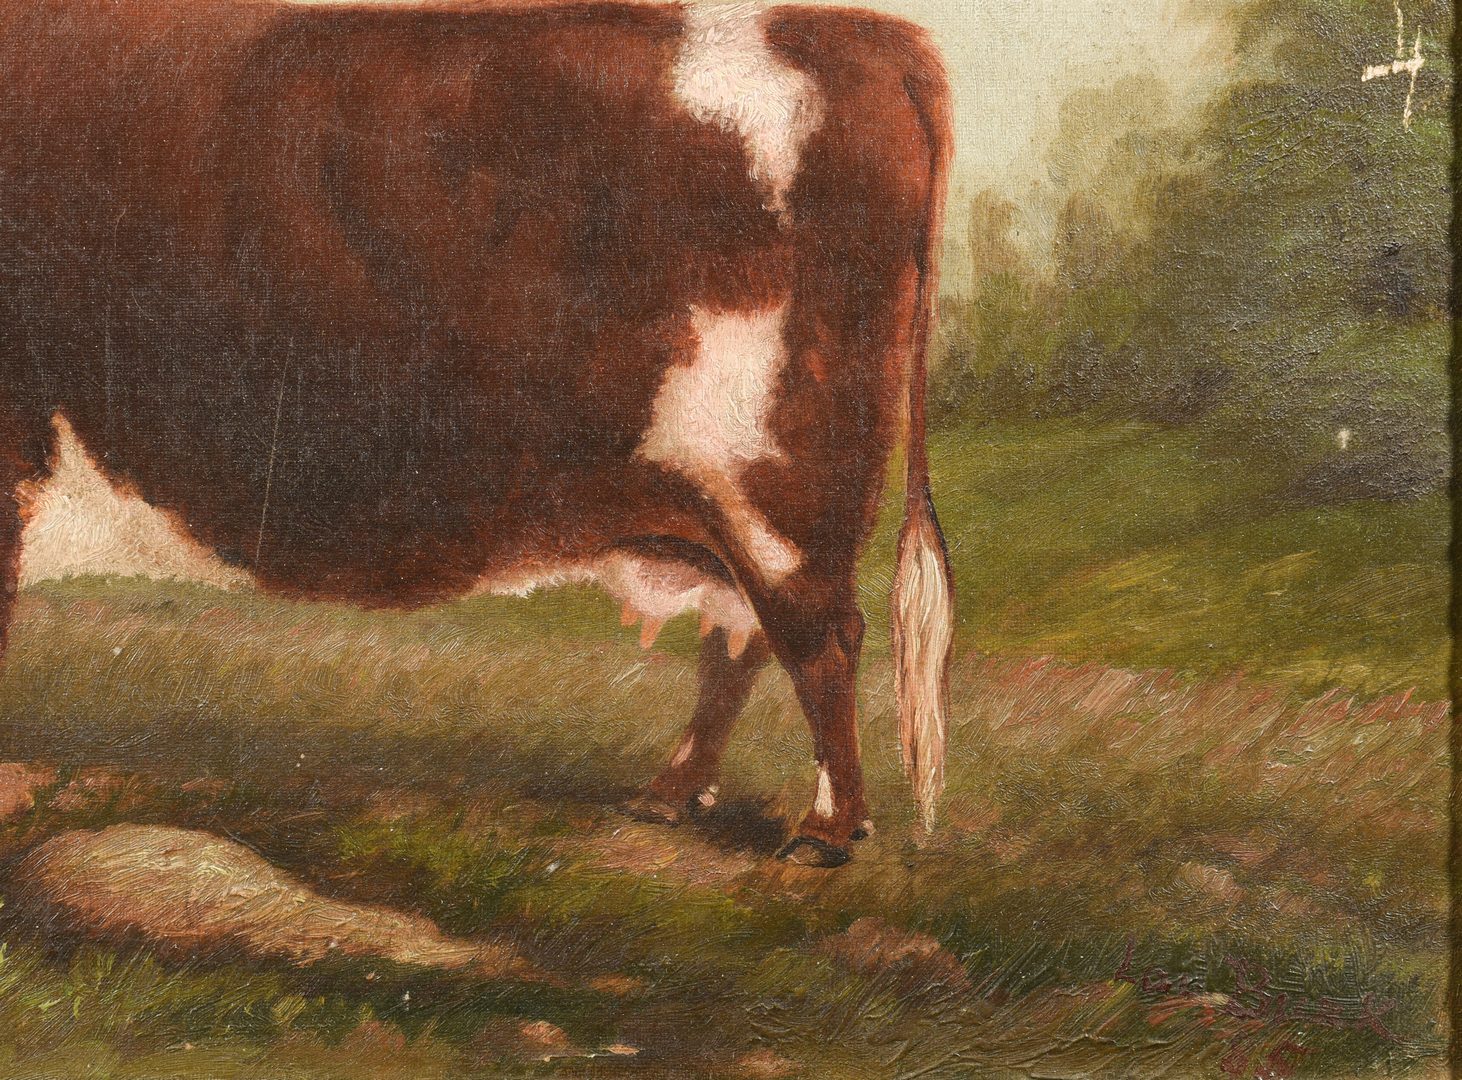 Lot 219: 19th c. Portrait of a Prize Cow, Devon Farm